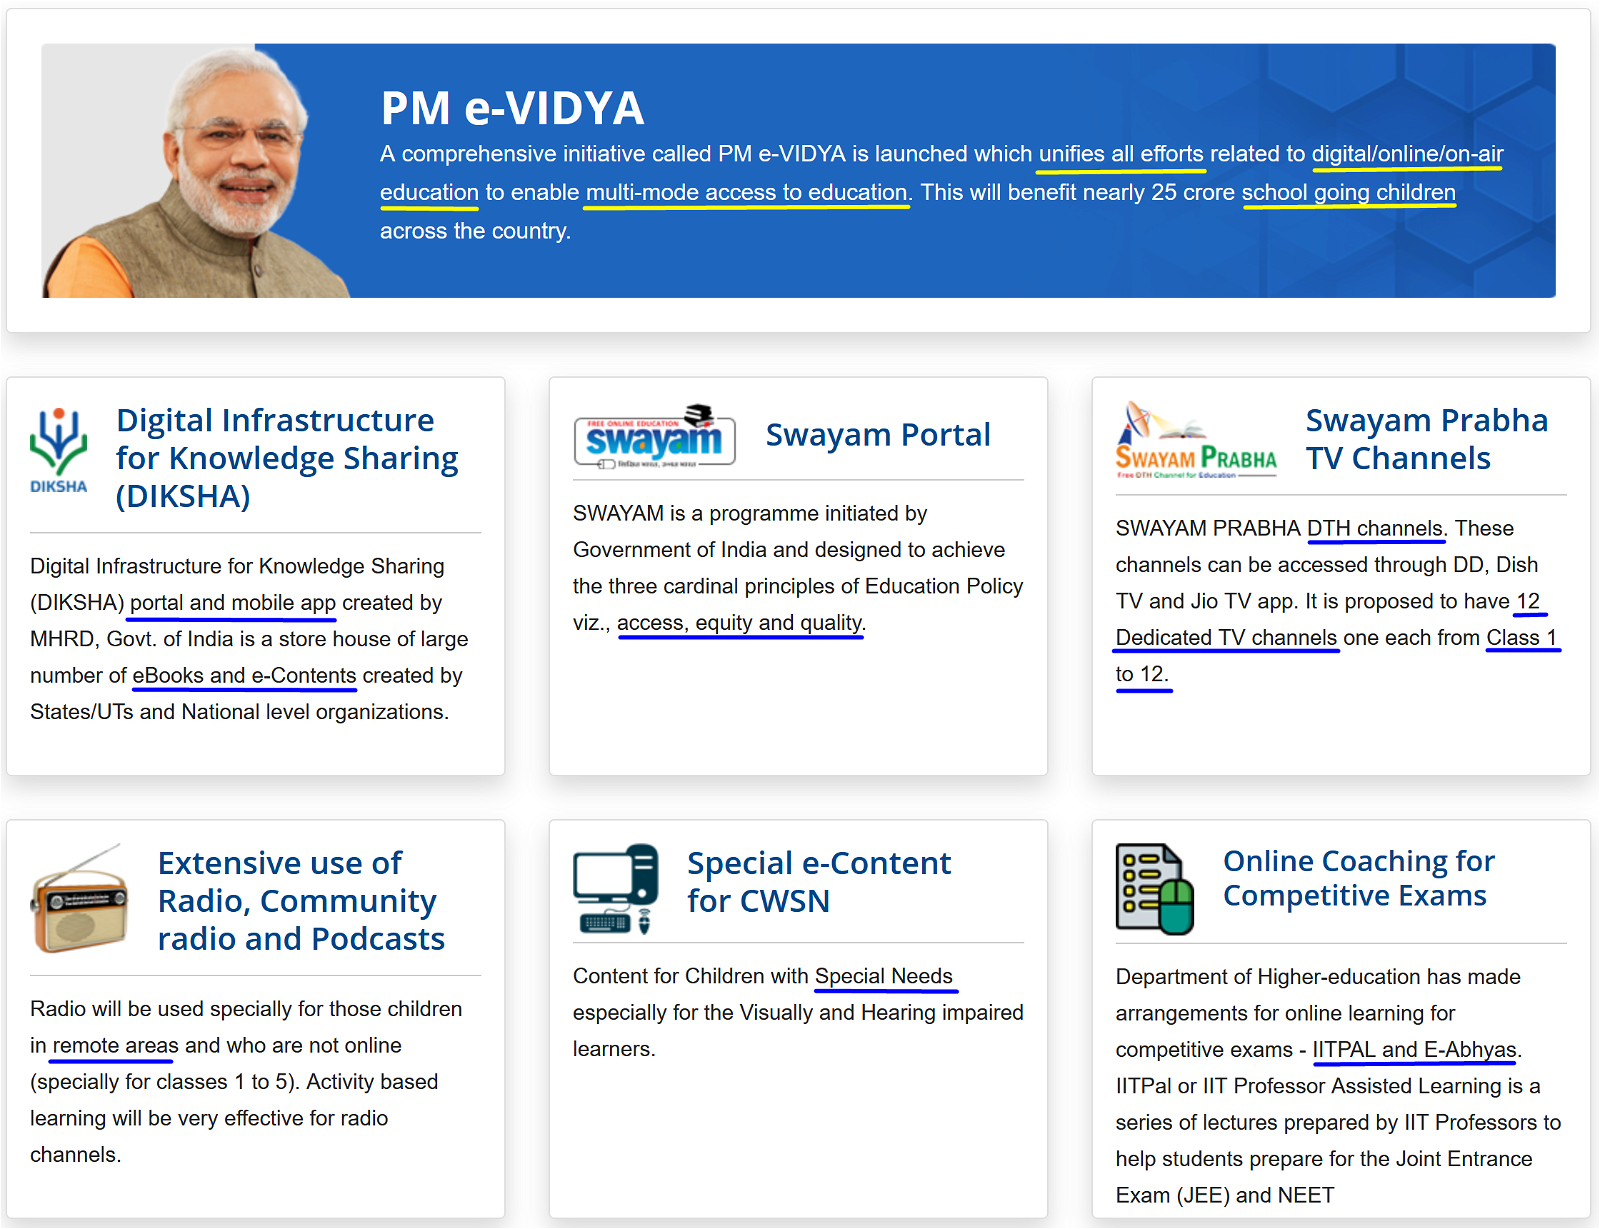 Components of PM e-VIDYA